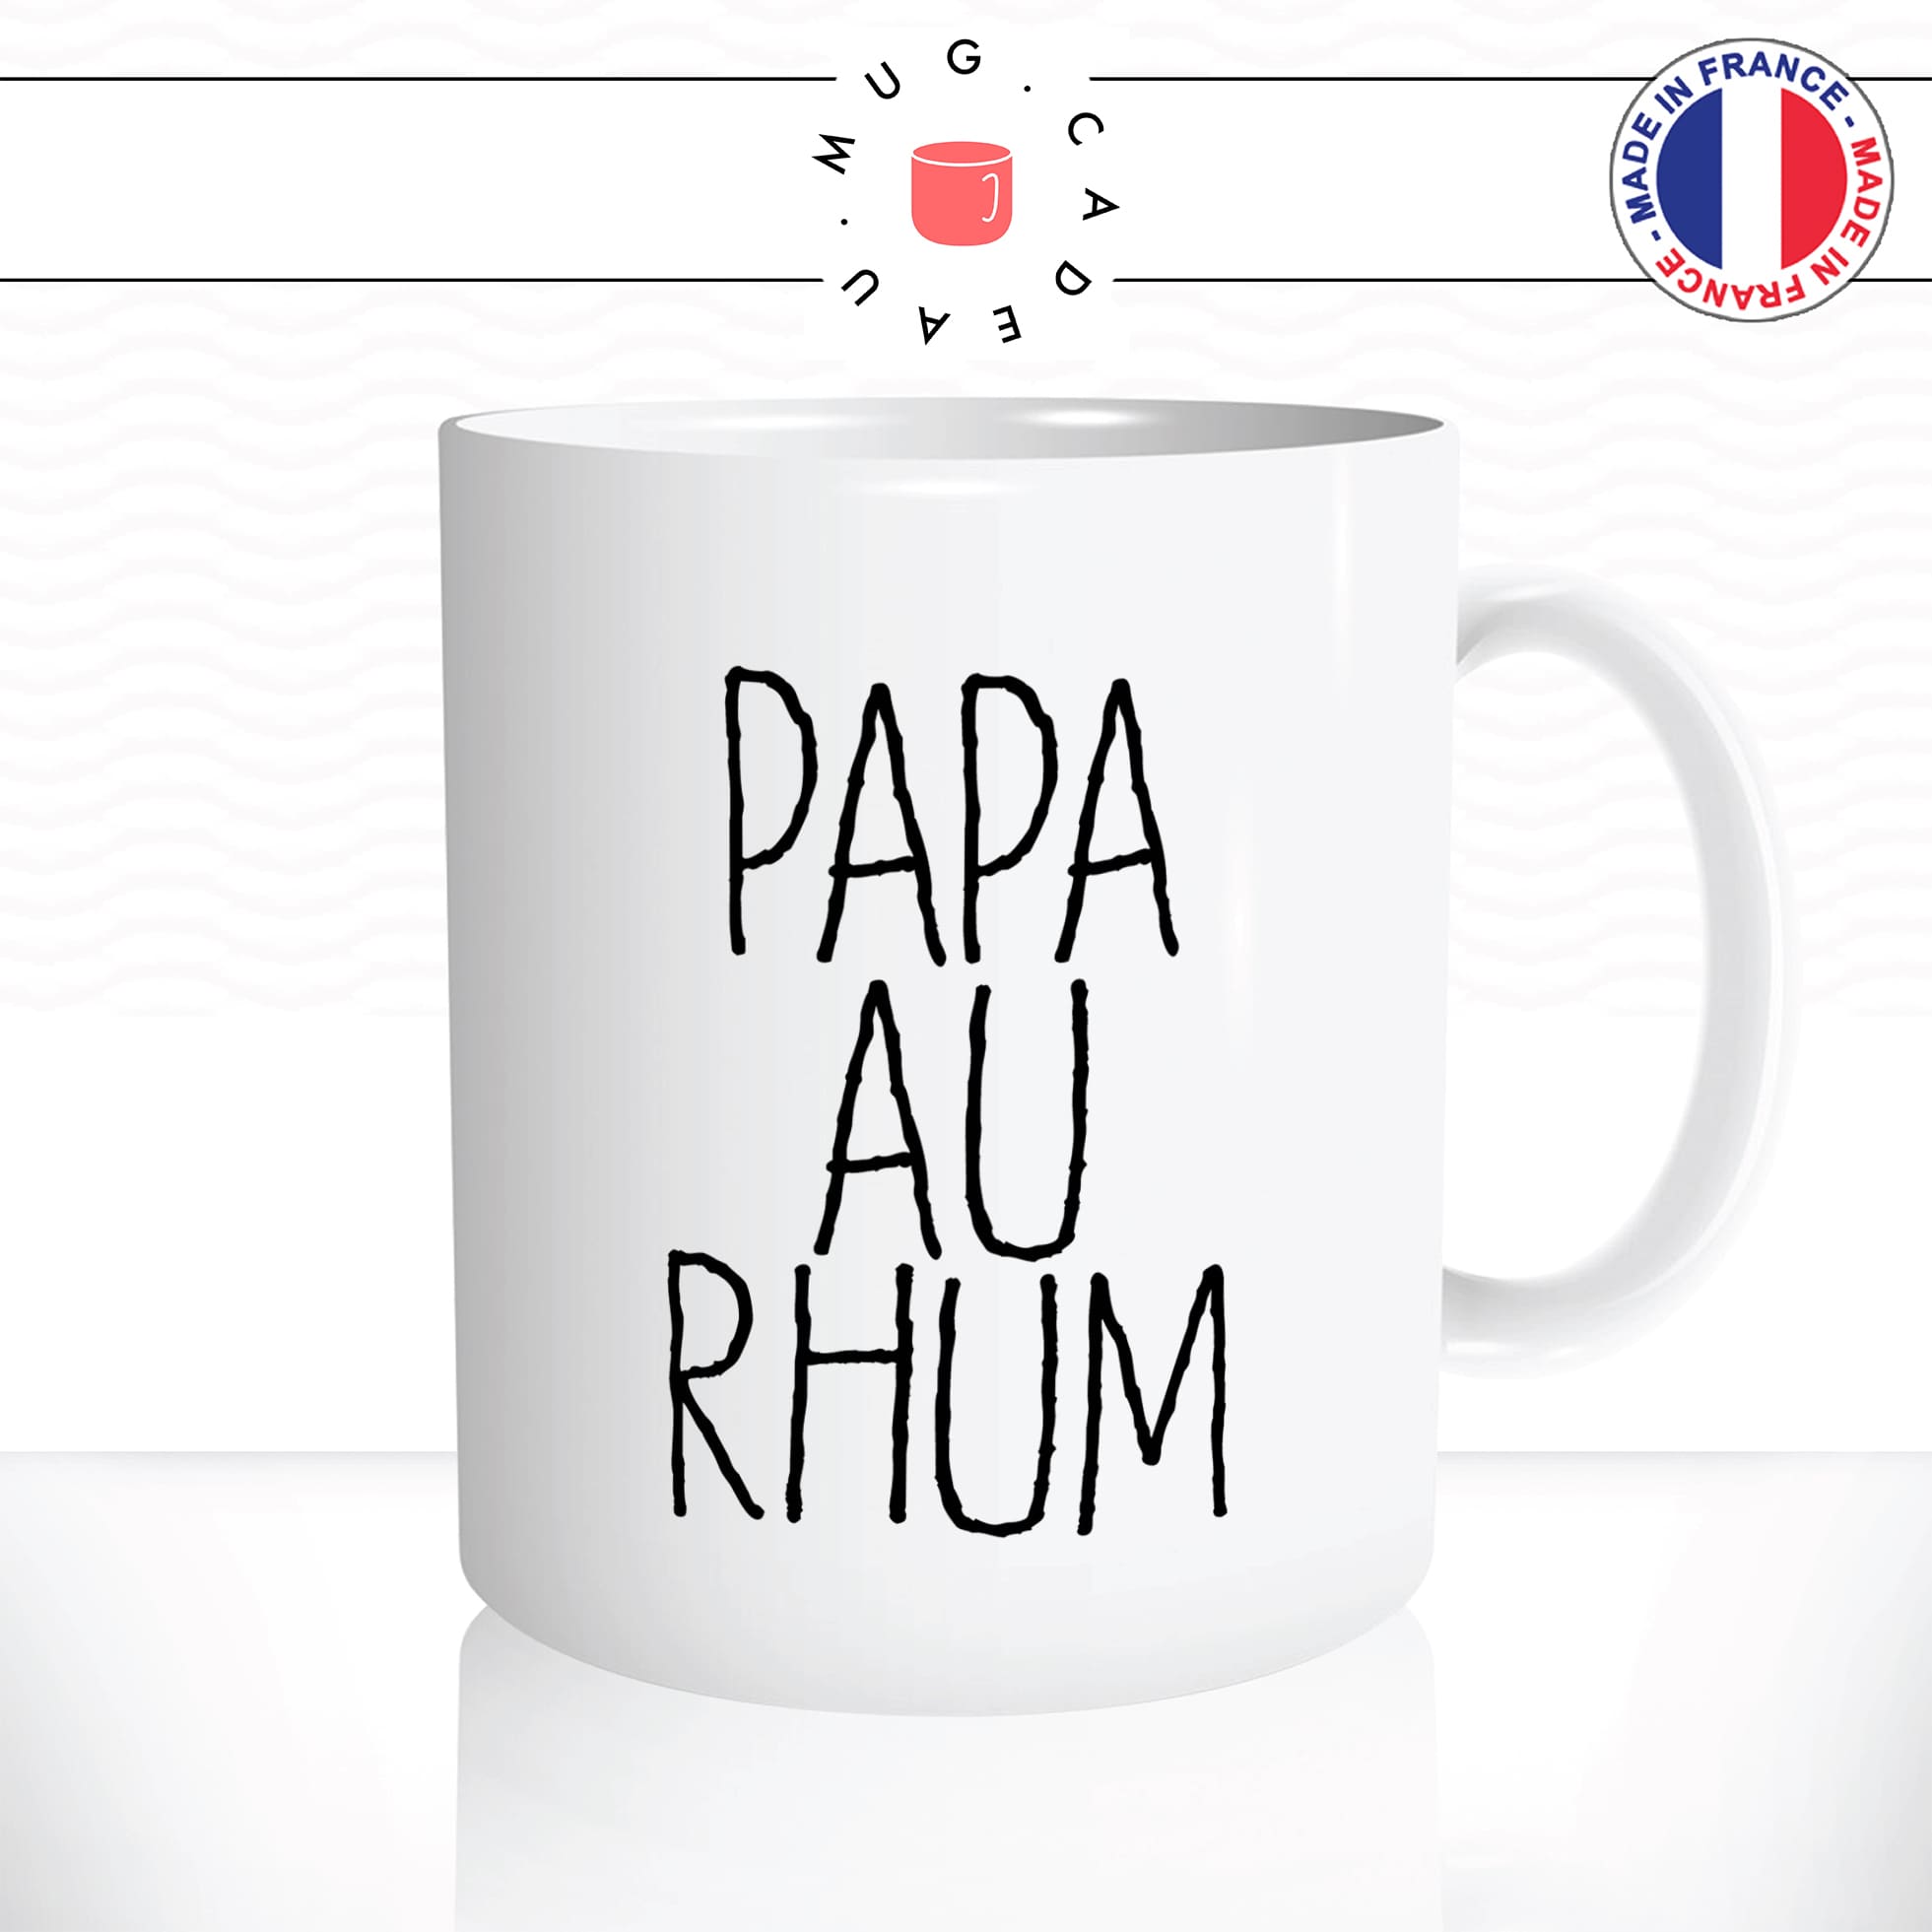 mug-tasse-papa-au-rhum-alcool-fete-des-pères-pere-dad-humour-coffee-fun-reveil-café-thé-mugs-tasses-idée-cadeau-original-personnalisée2